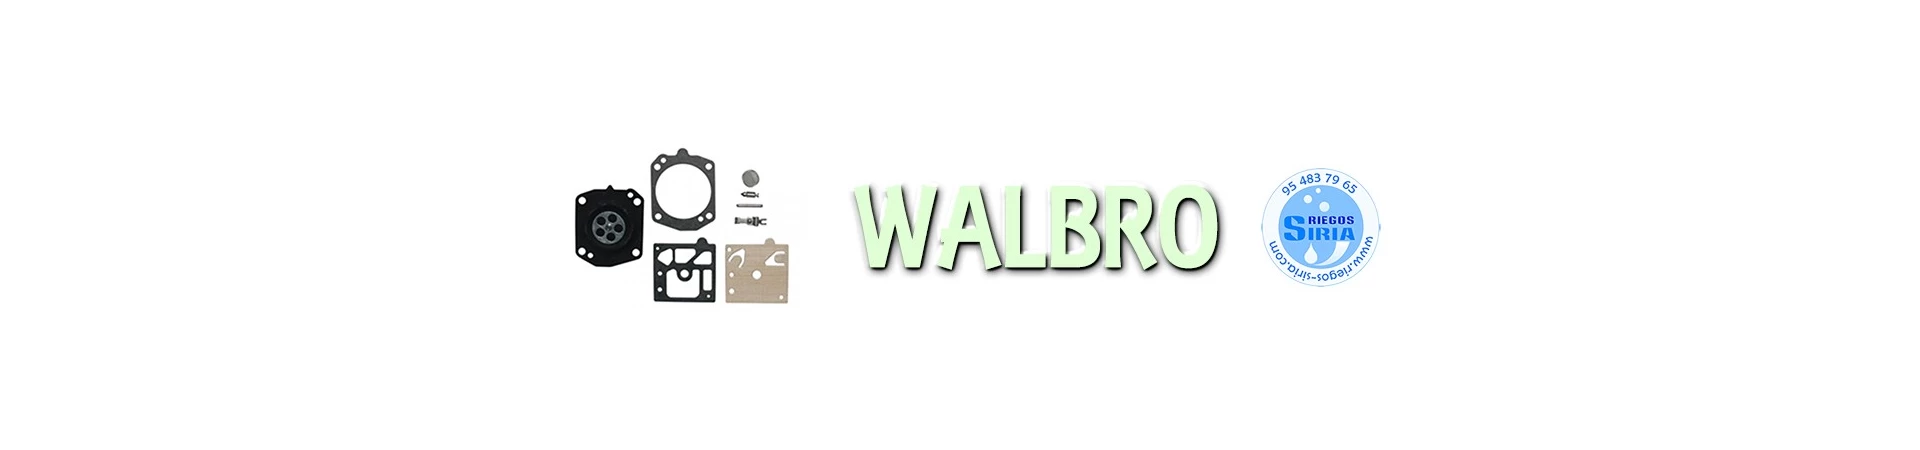 Kit Membranas Walbro